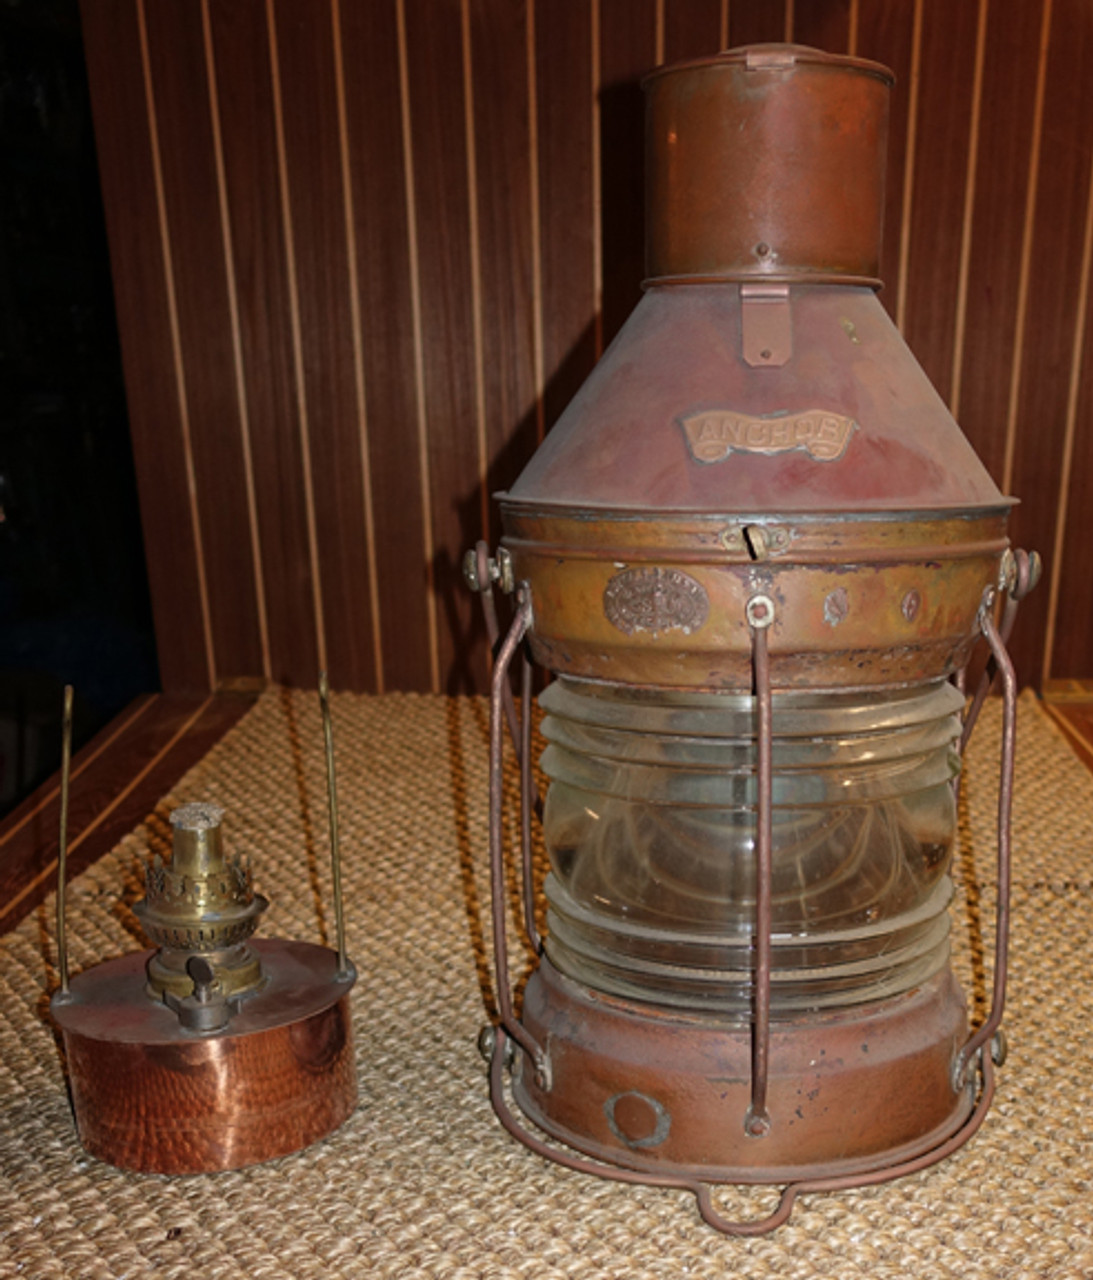 Vintage Copper Oil Anchor Lantern-Smith Bridge Works